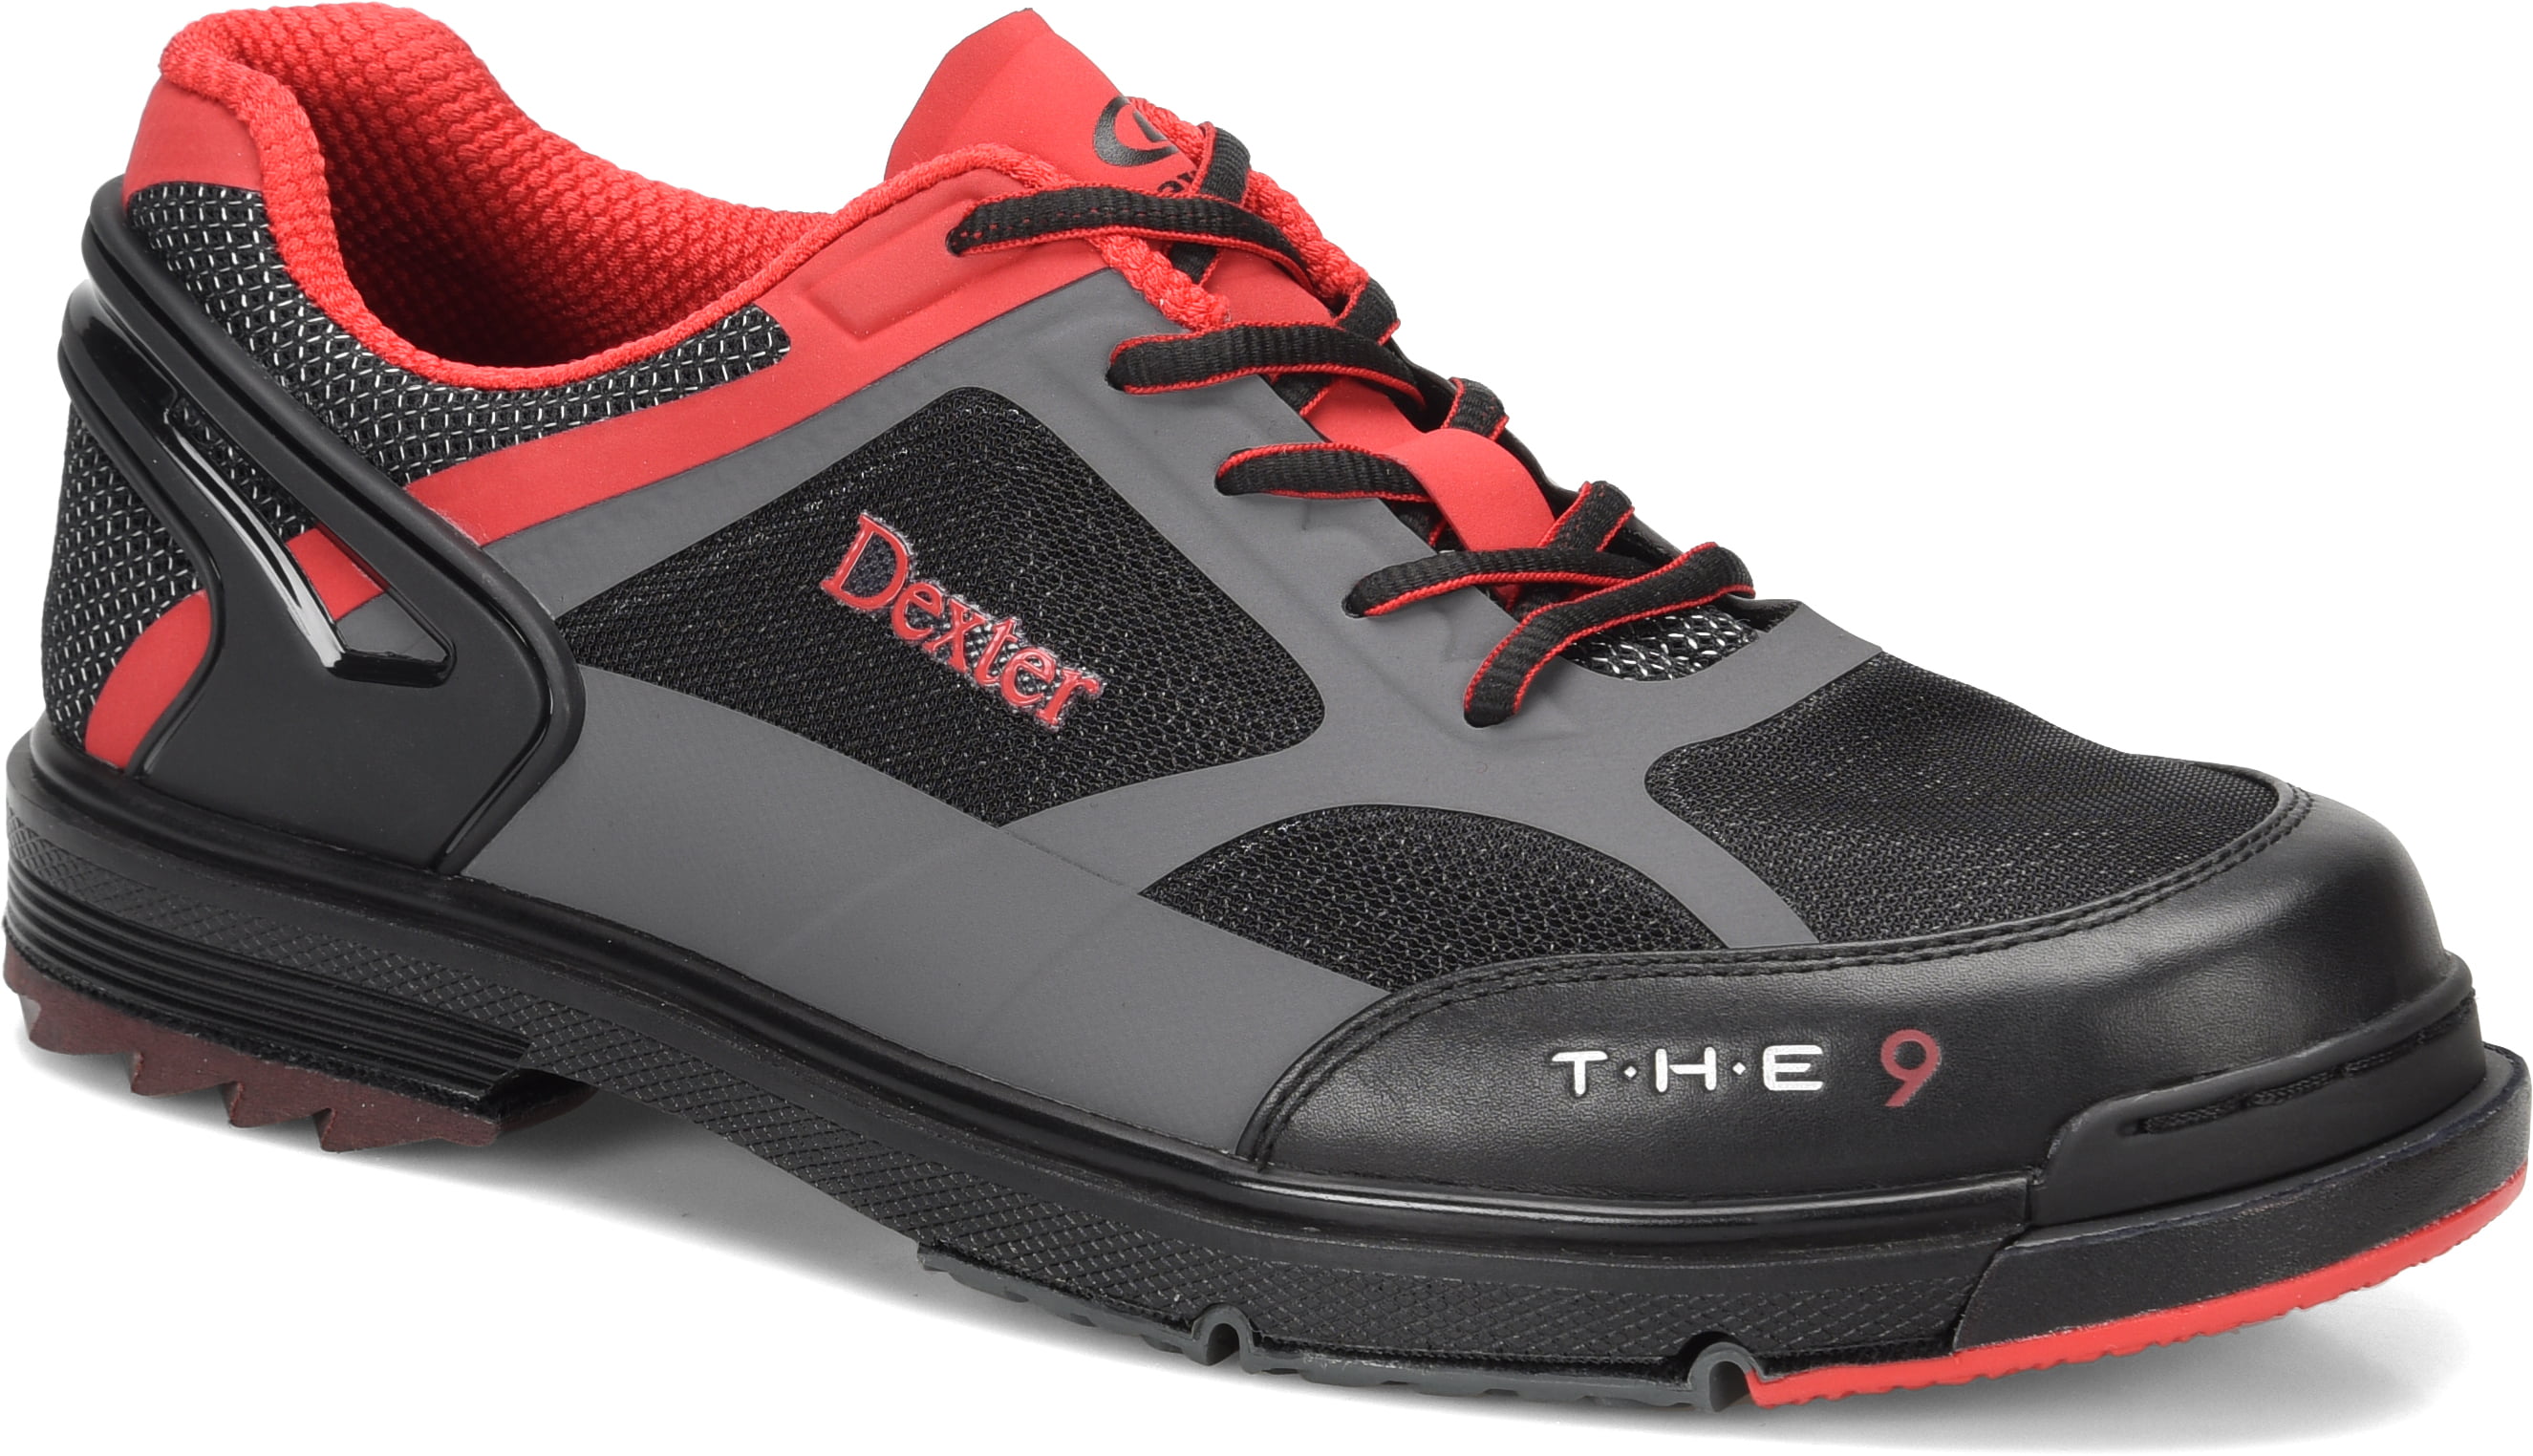 Men's Dexter THE 9 HT Black/Grey/Red Interchangeable Bowling Shoes Size 7.5 WIDE 